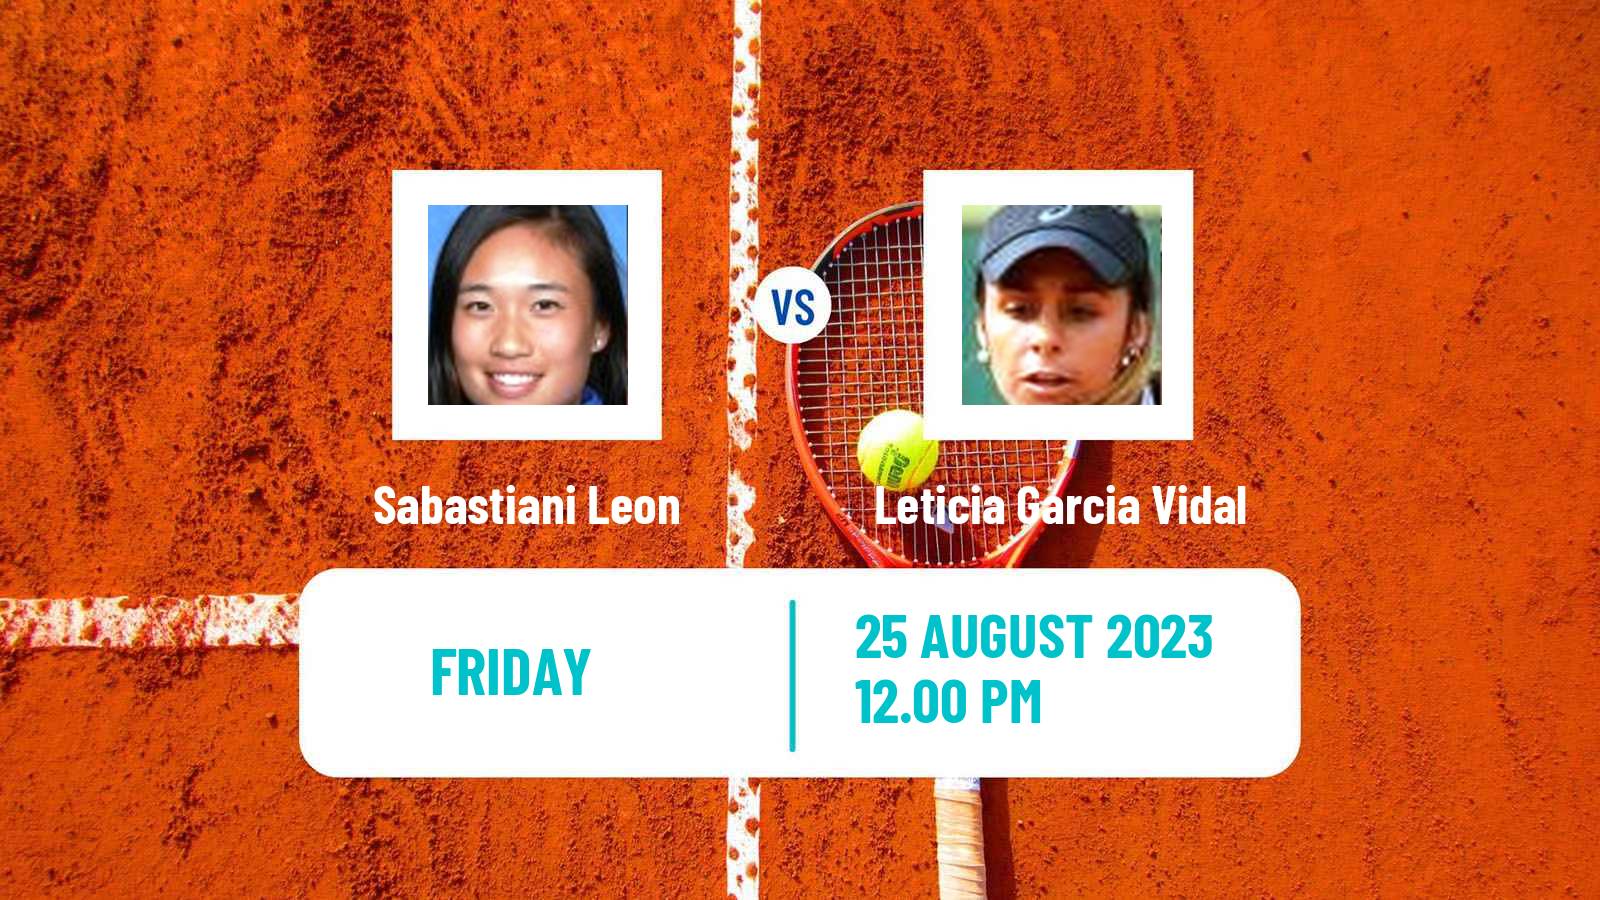 Tennis ITF W15 Lima Women Sabastiani Leon - Leticia Garcia Vidal